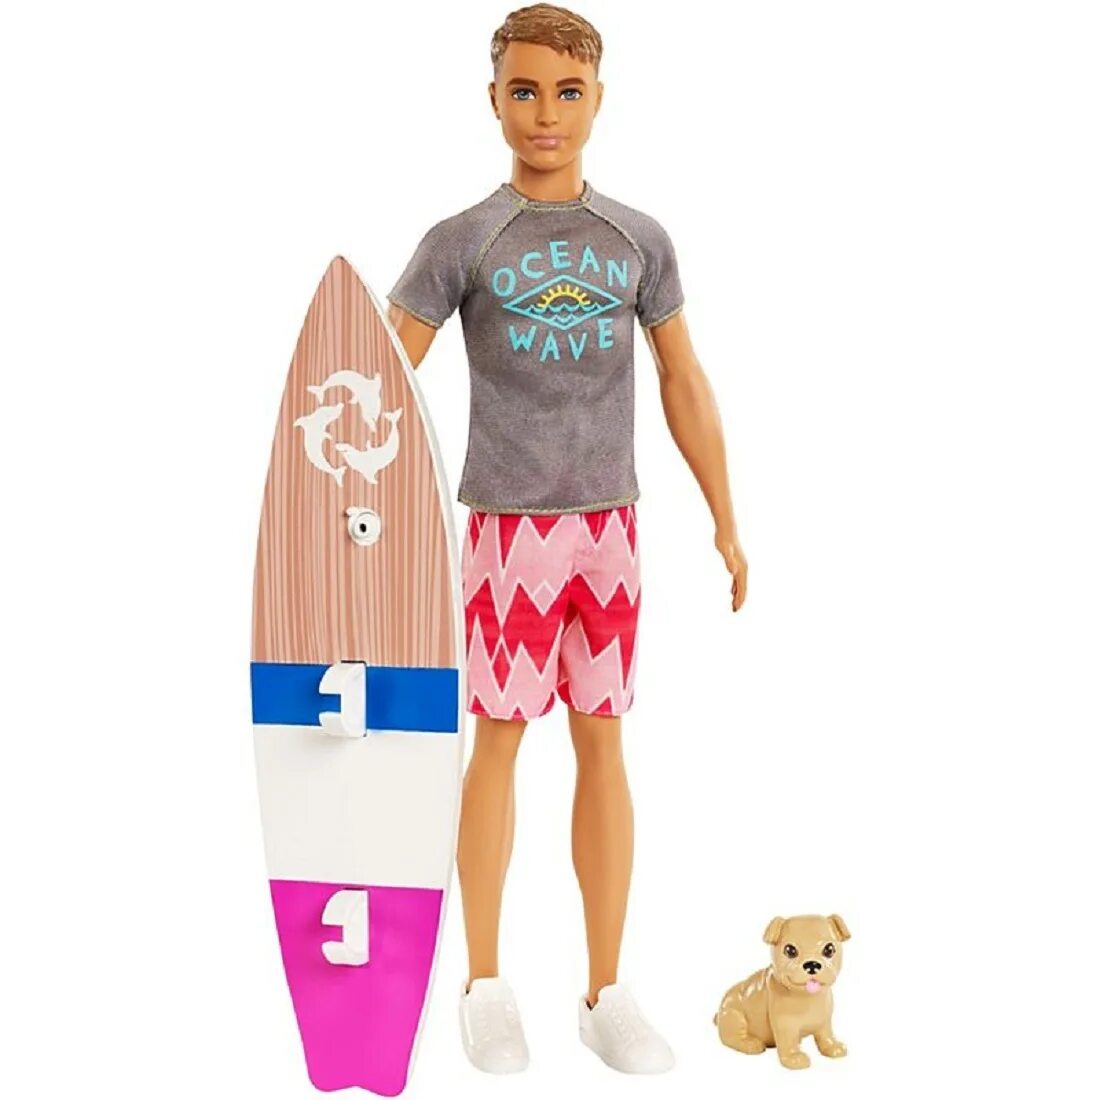 Кукла Кен. Кукла Barbie морские приключения Кен, fbd71. Кукла Кен серфер. Кукла Кен Surf.